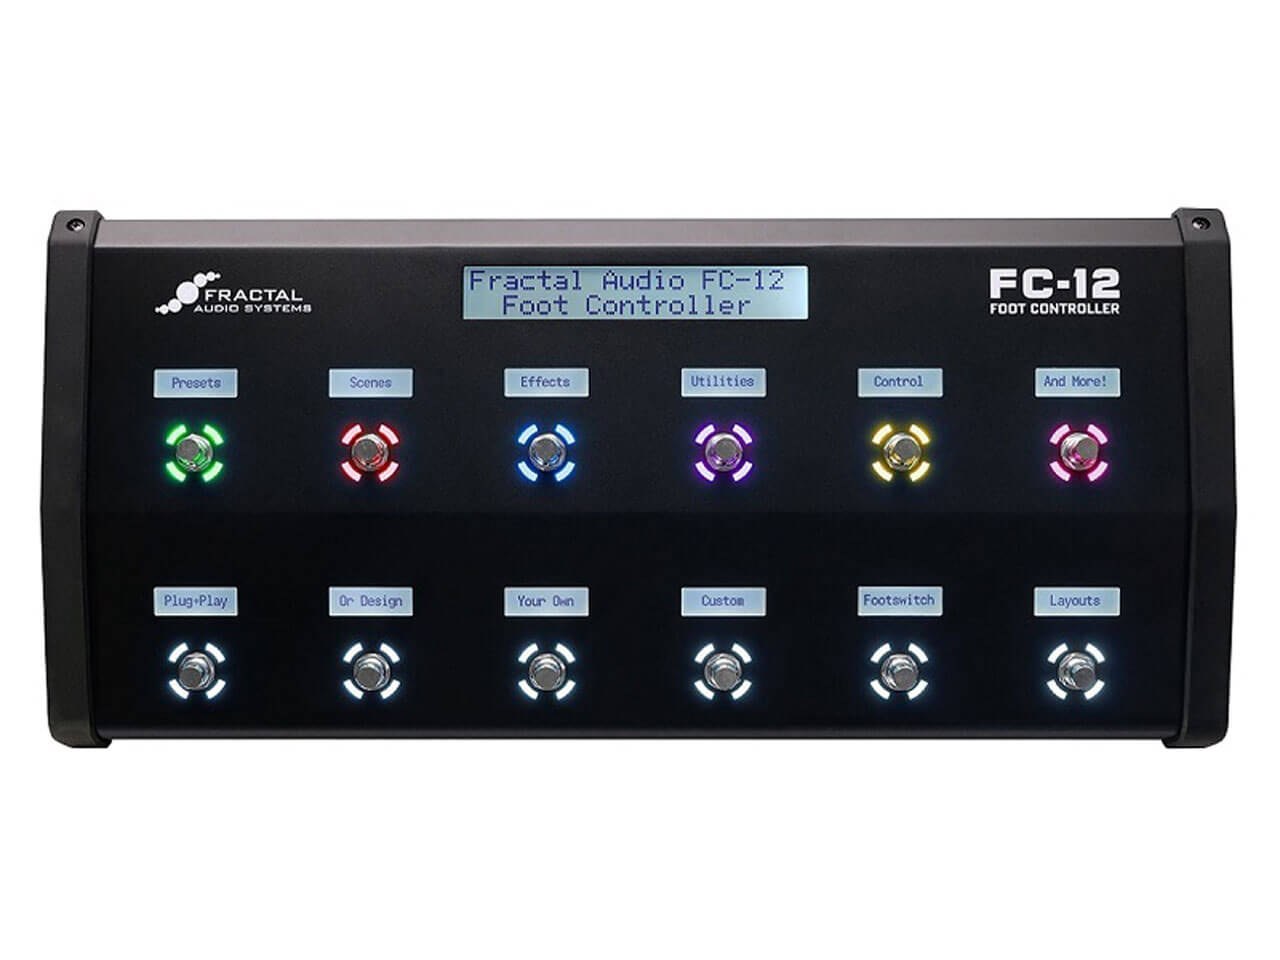 FRACTAL AUDIO SYSTEMS(フラクタルオーディオシステムズ) FC-12 Foot Controller (フットコントローラー)